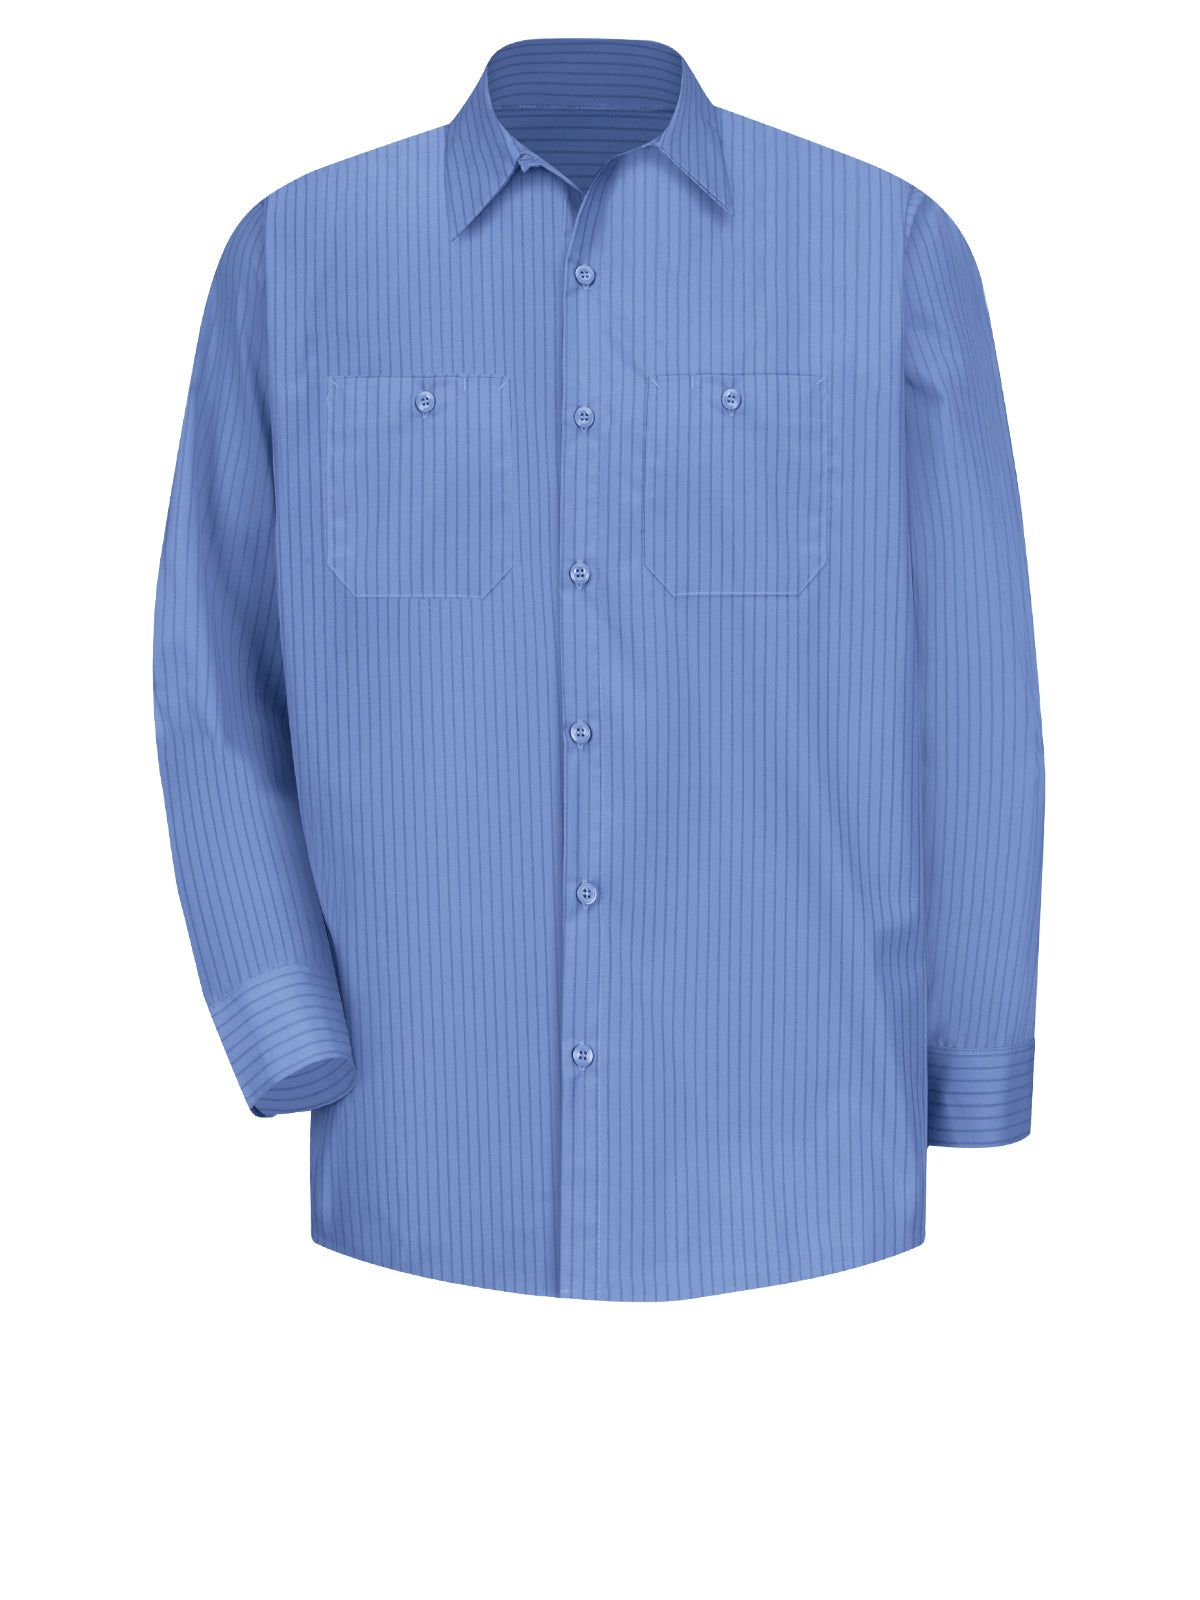 Men's Long Sleeve Industrial Work Shirt - SB12 - Blue Stripes